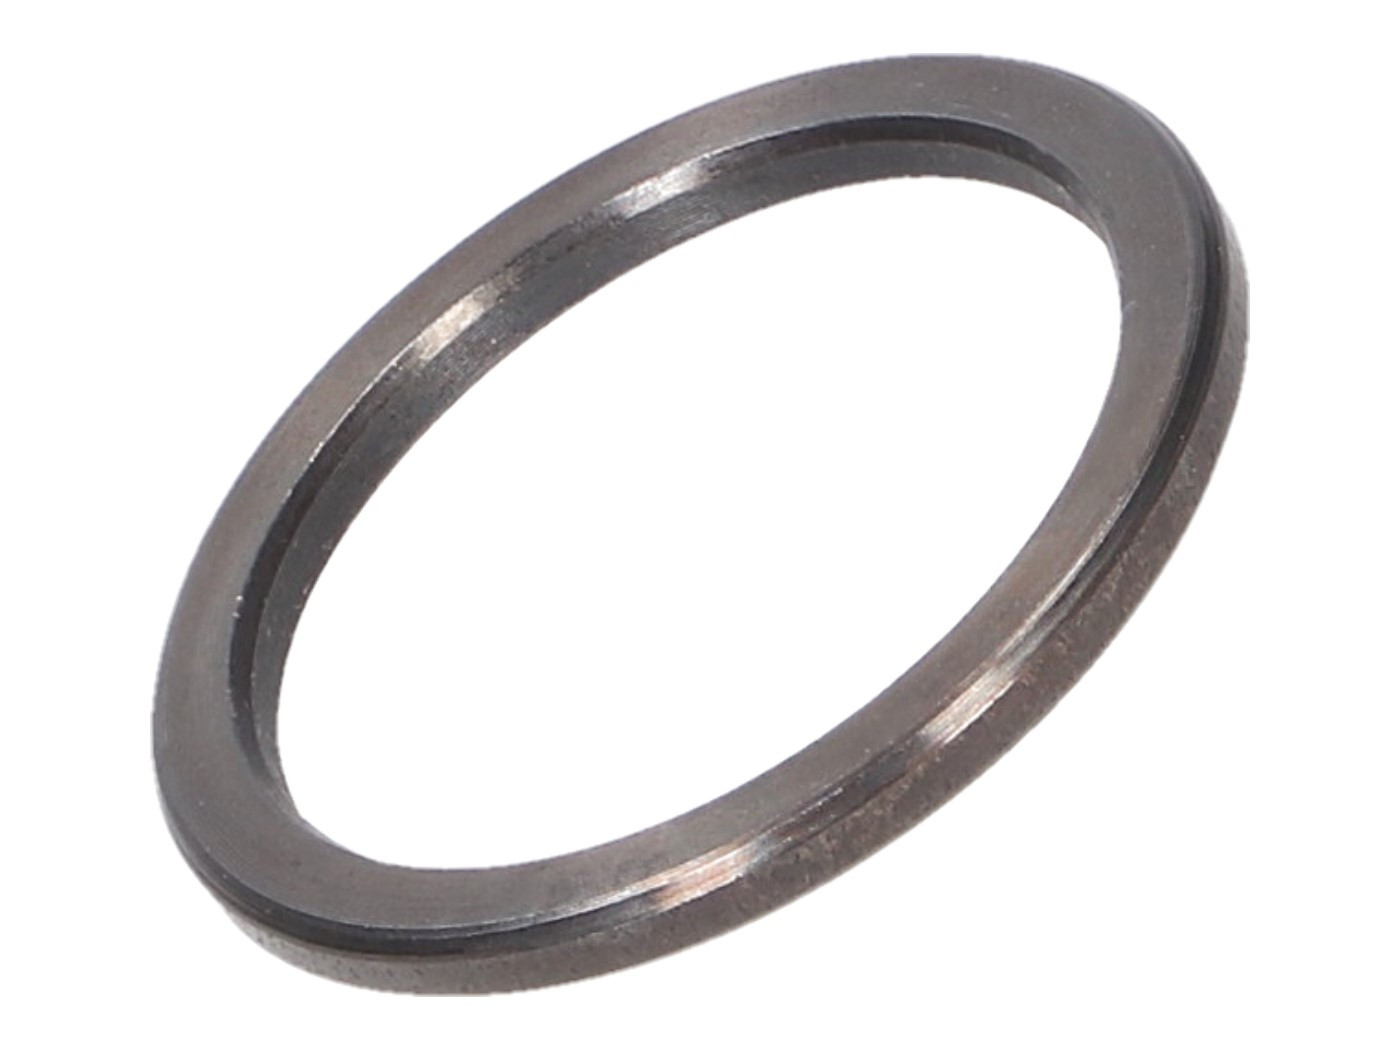 Variátor korlátozó gyűrű (limiter) 2mm - Piaggio, Kínai 4T (4 ütemű), Kymco, SYM